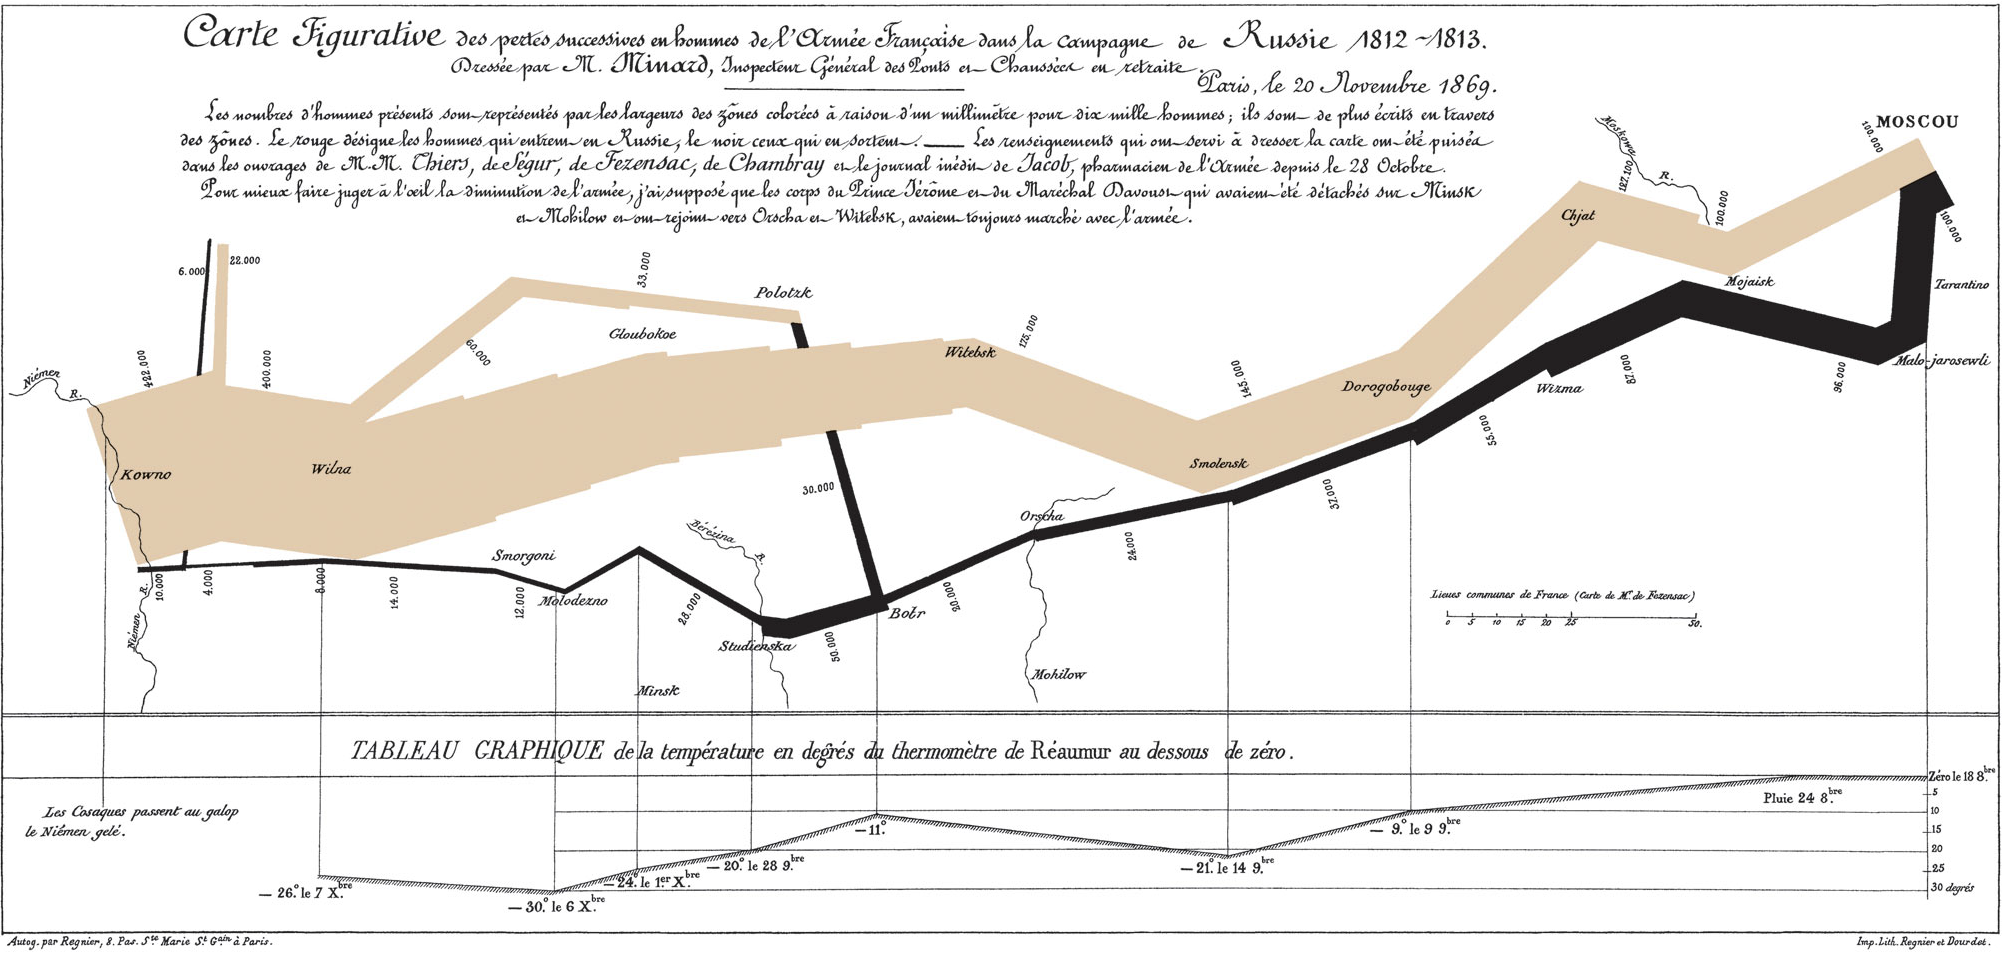 Classic epidemiology visualizations - Napoleon’s Russian 1812 Campaign 